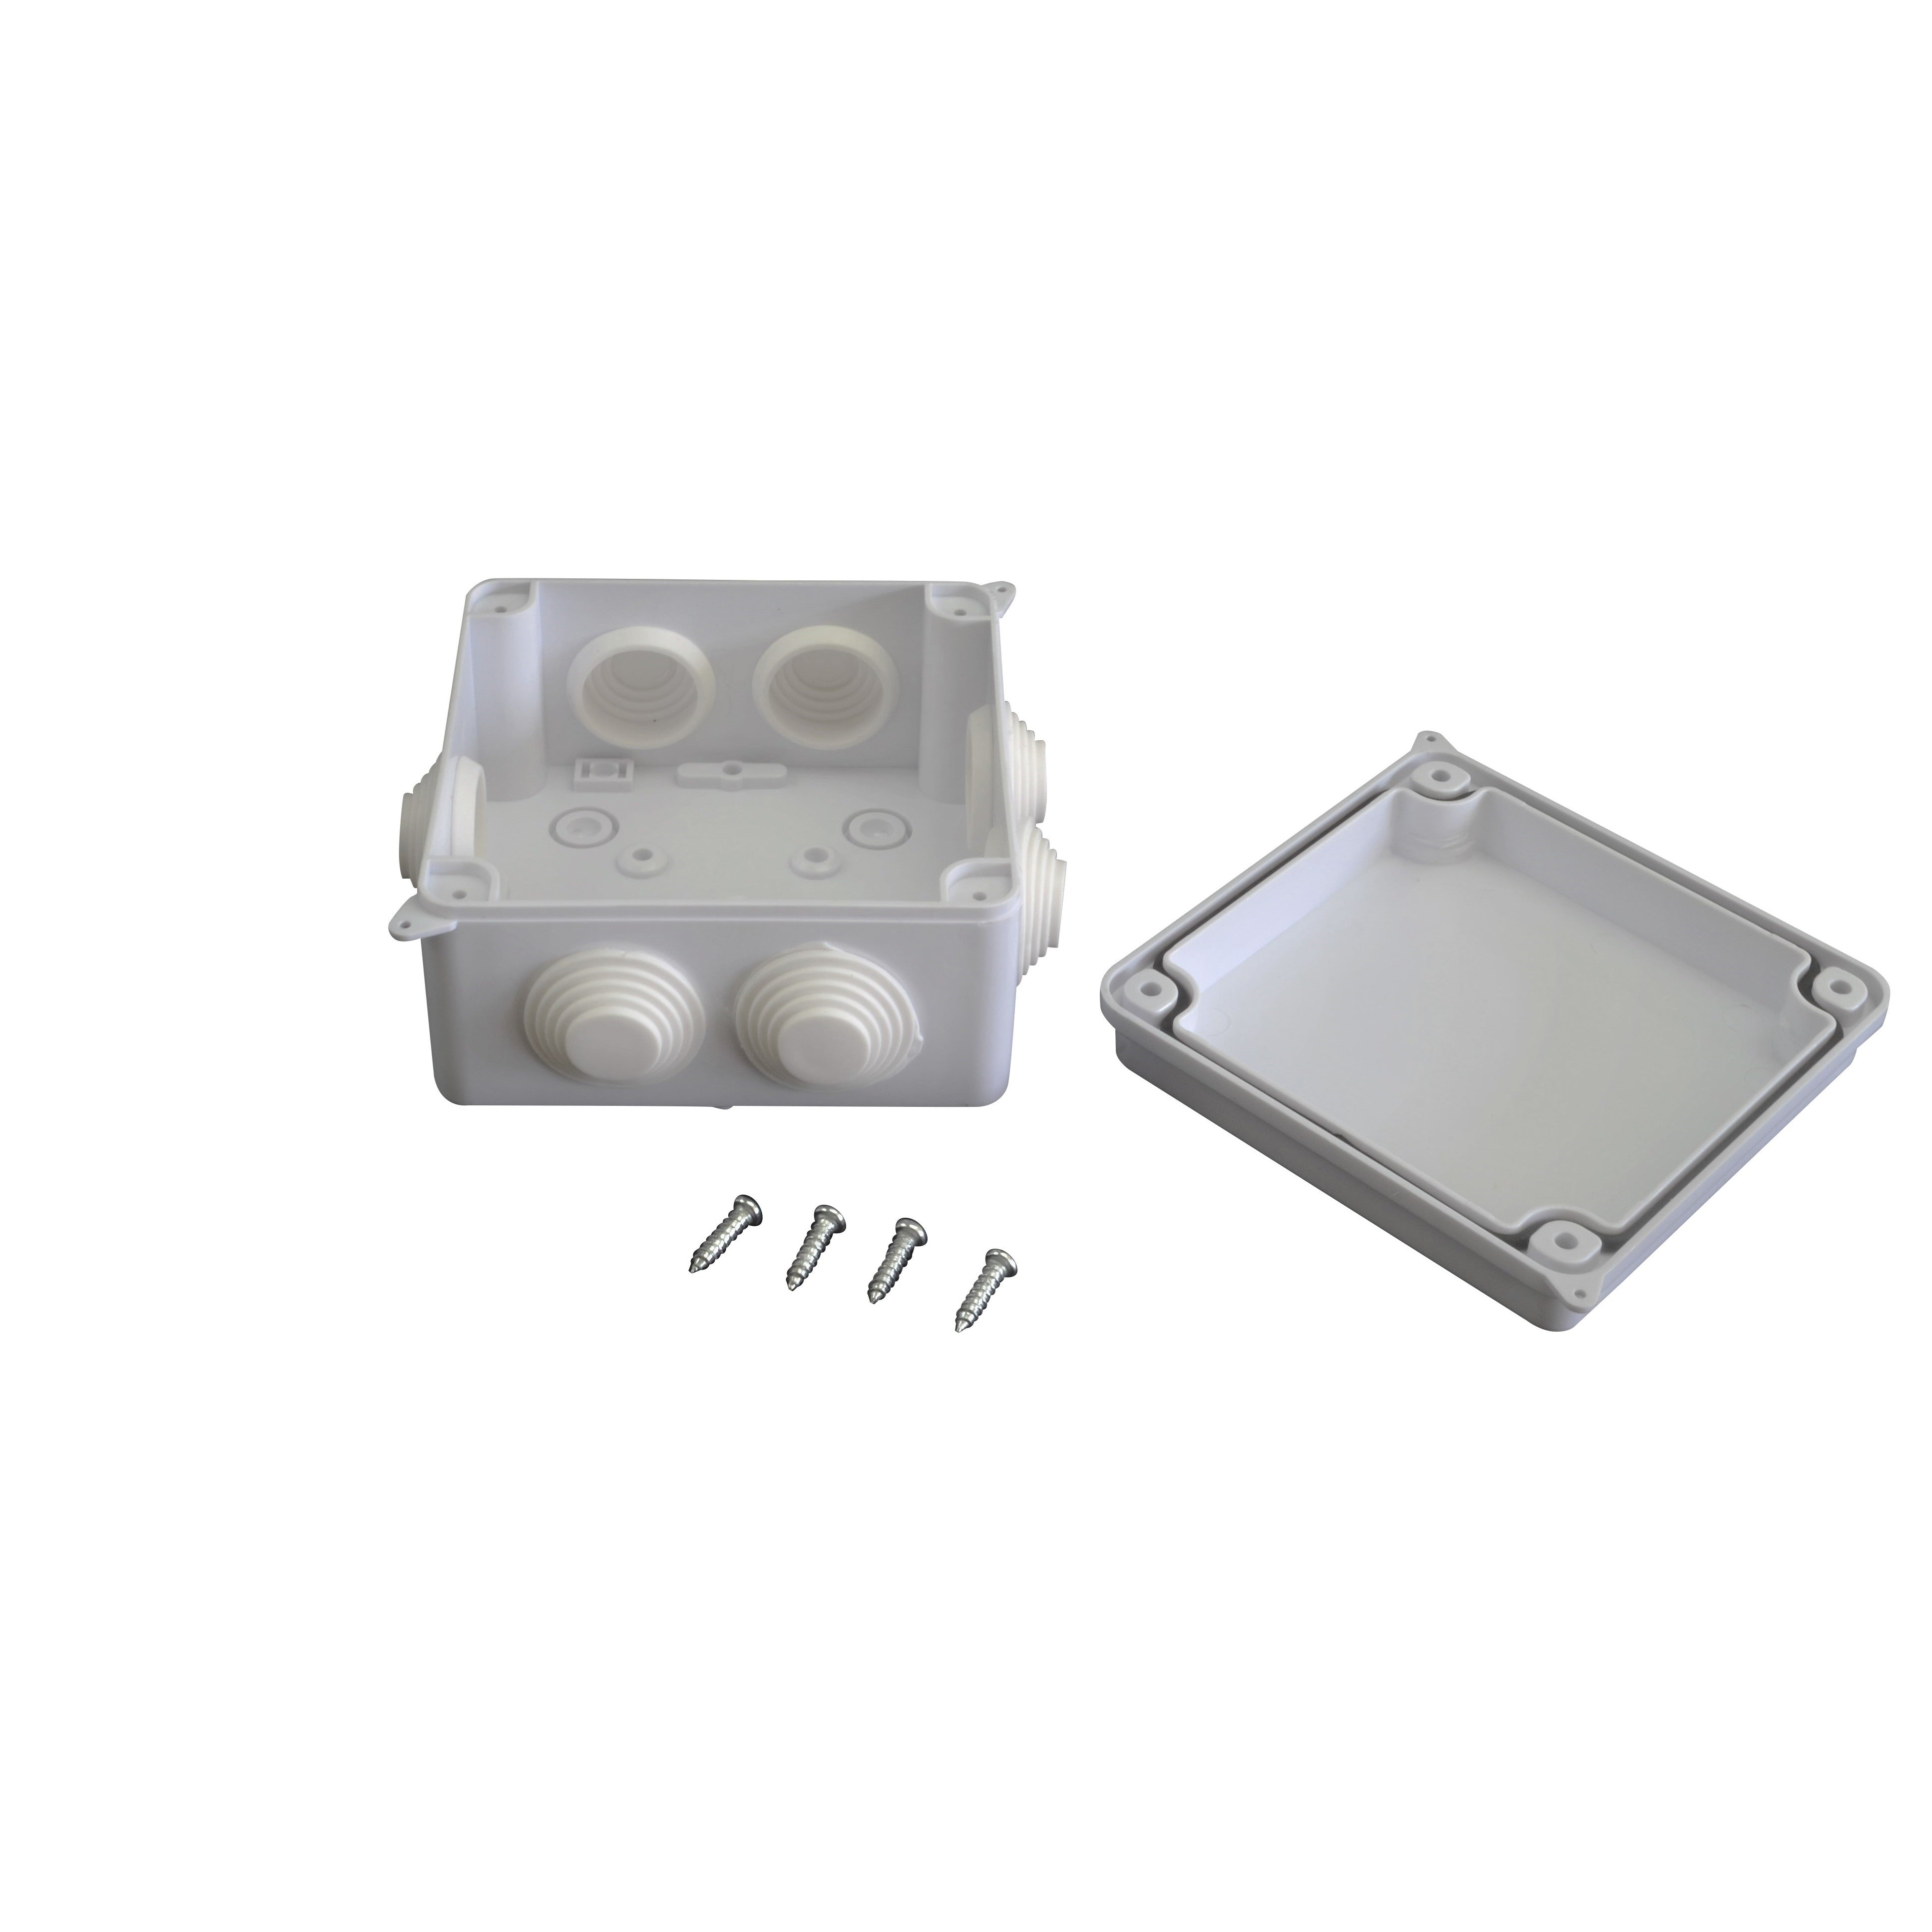 100x100x70 mm ABS Plastic IP65 Waterproof Junction Box